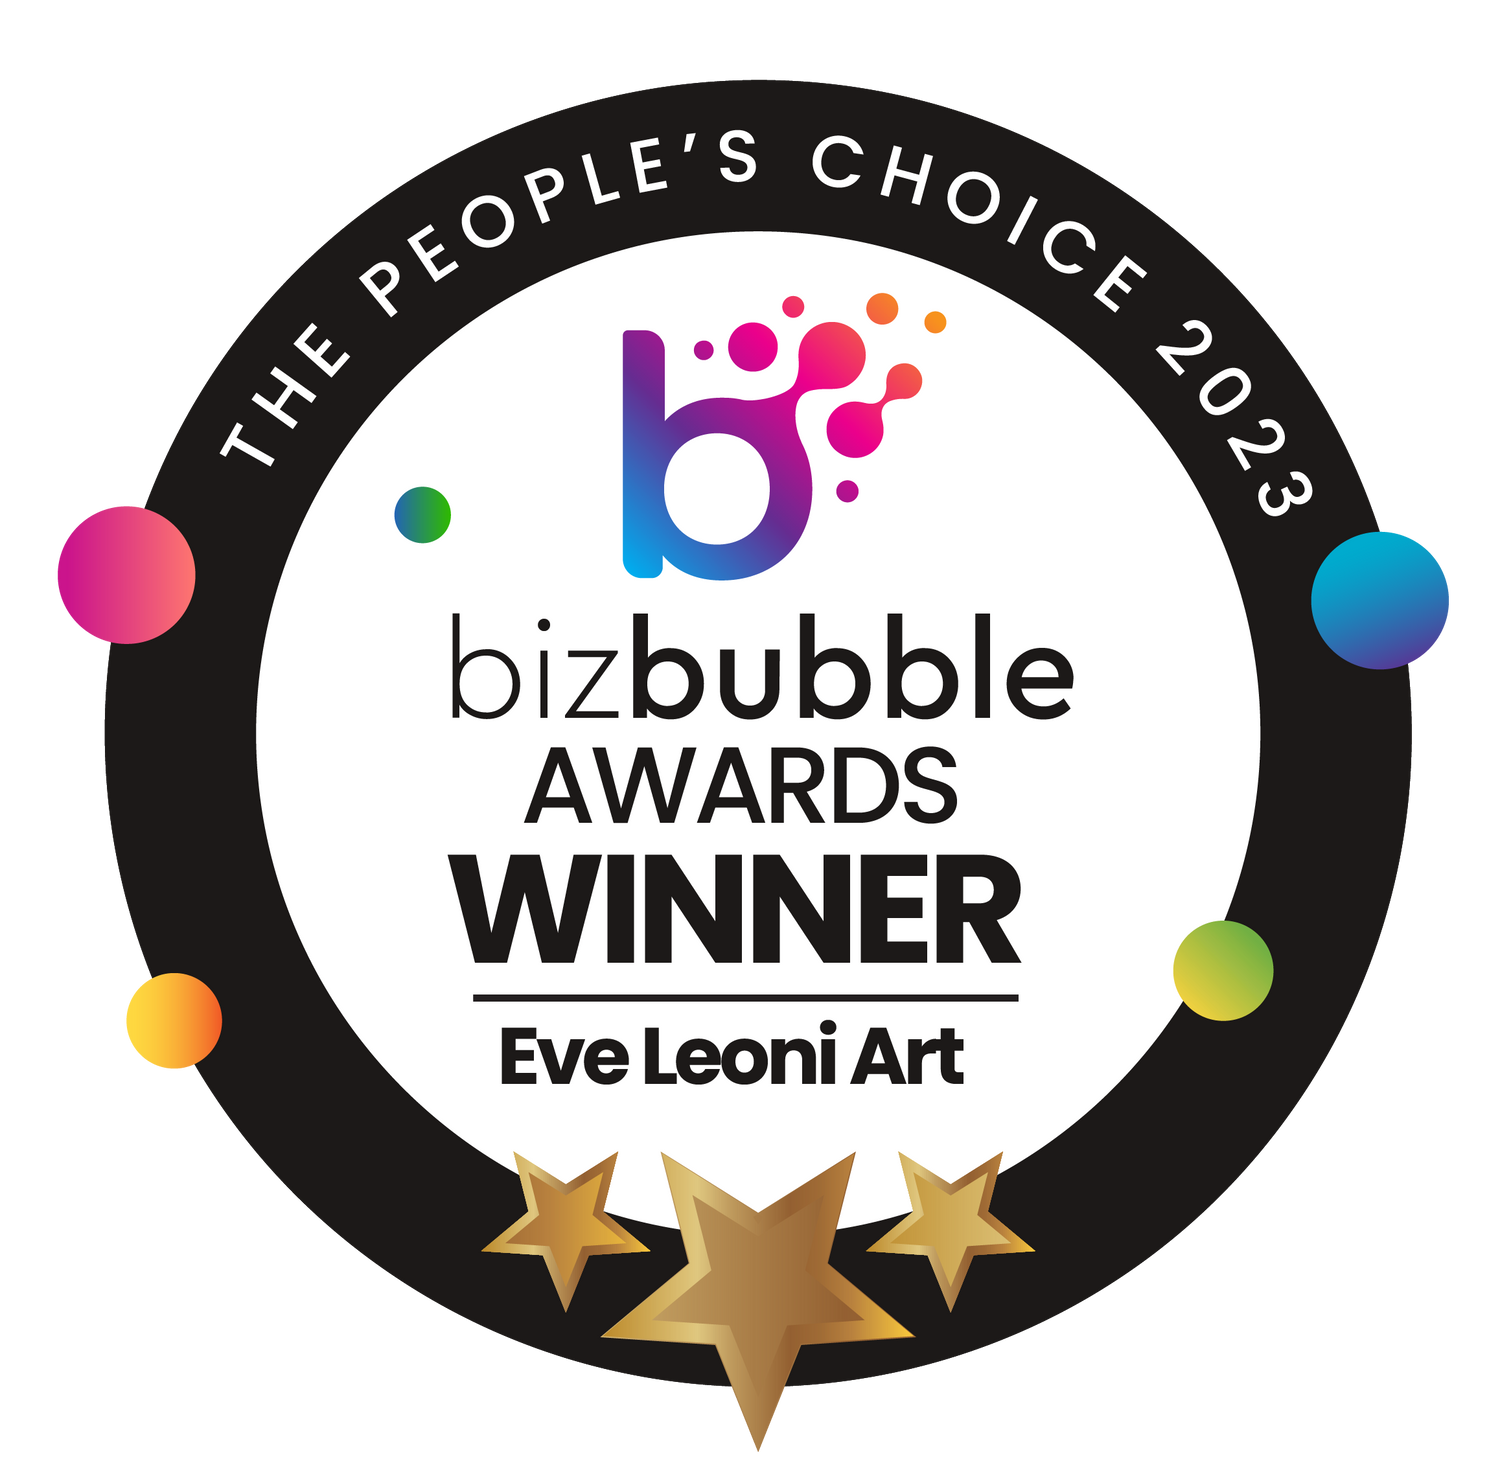 Eve Leoni Art is the BizBubble People's Choice Award Winning Artist 2023